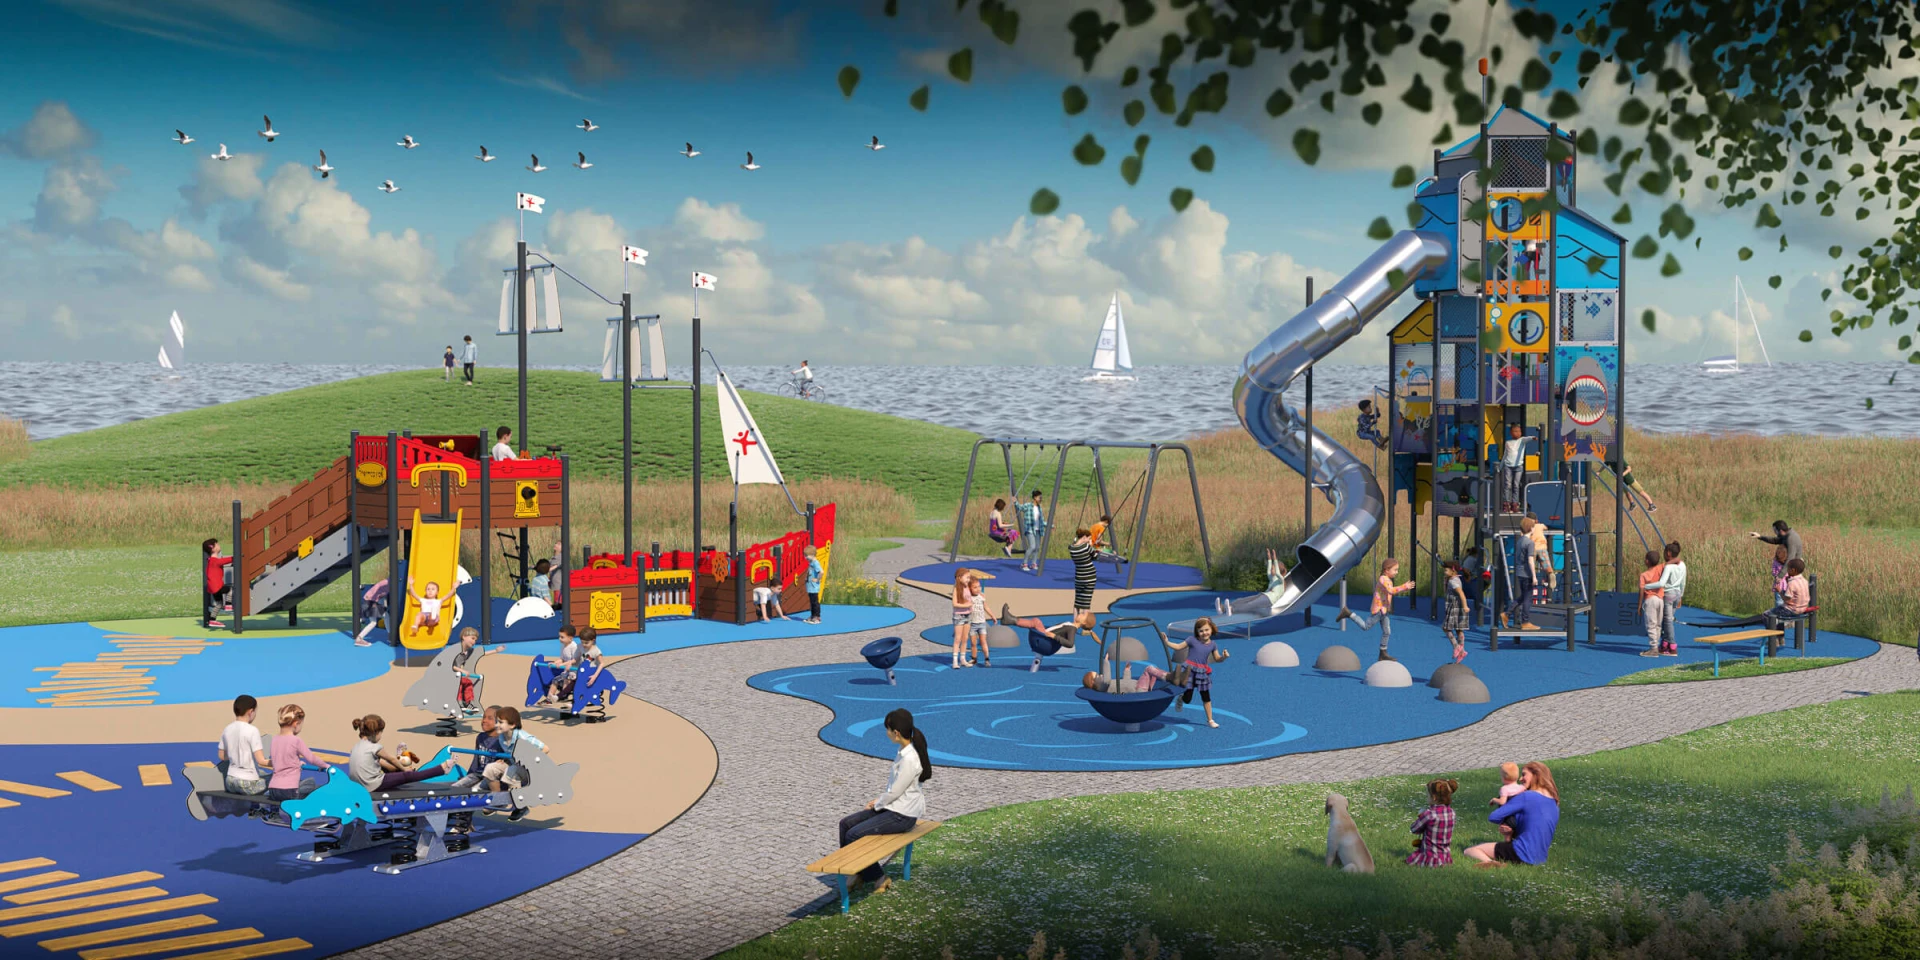 Conceptual playground idea for a sea themed playground with a ship and playground tower